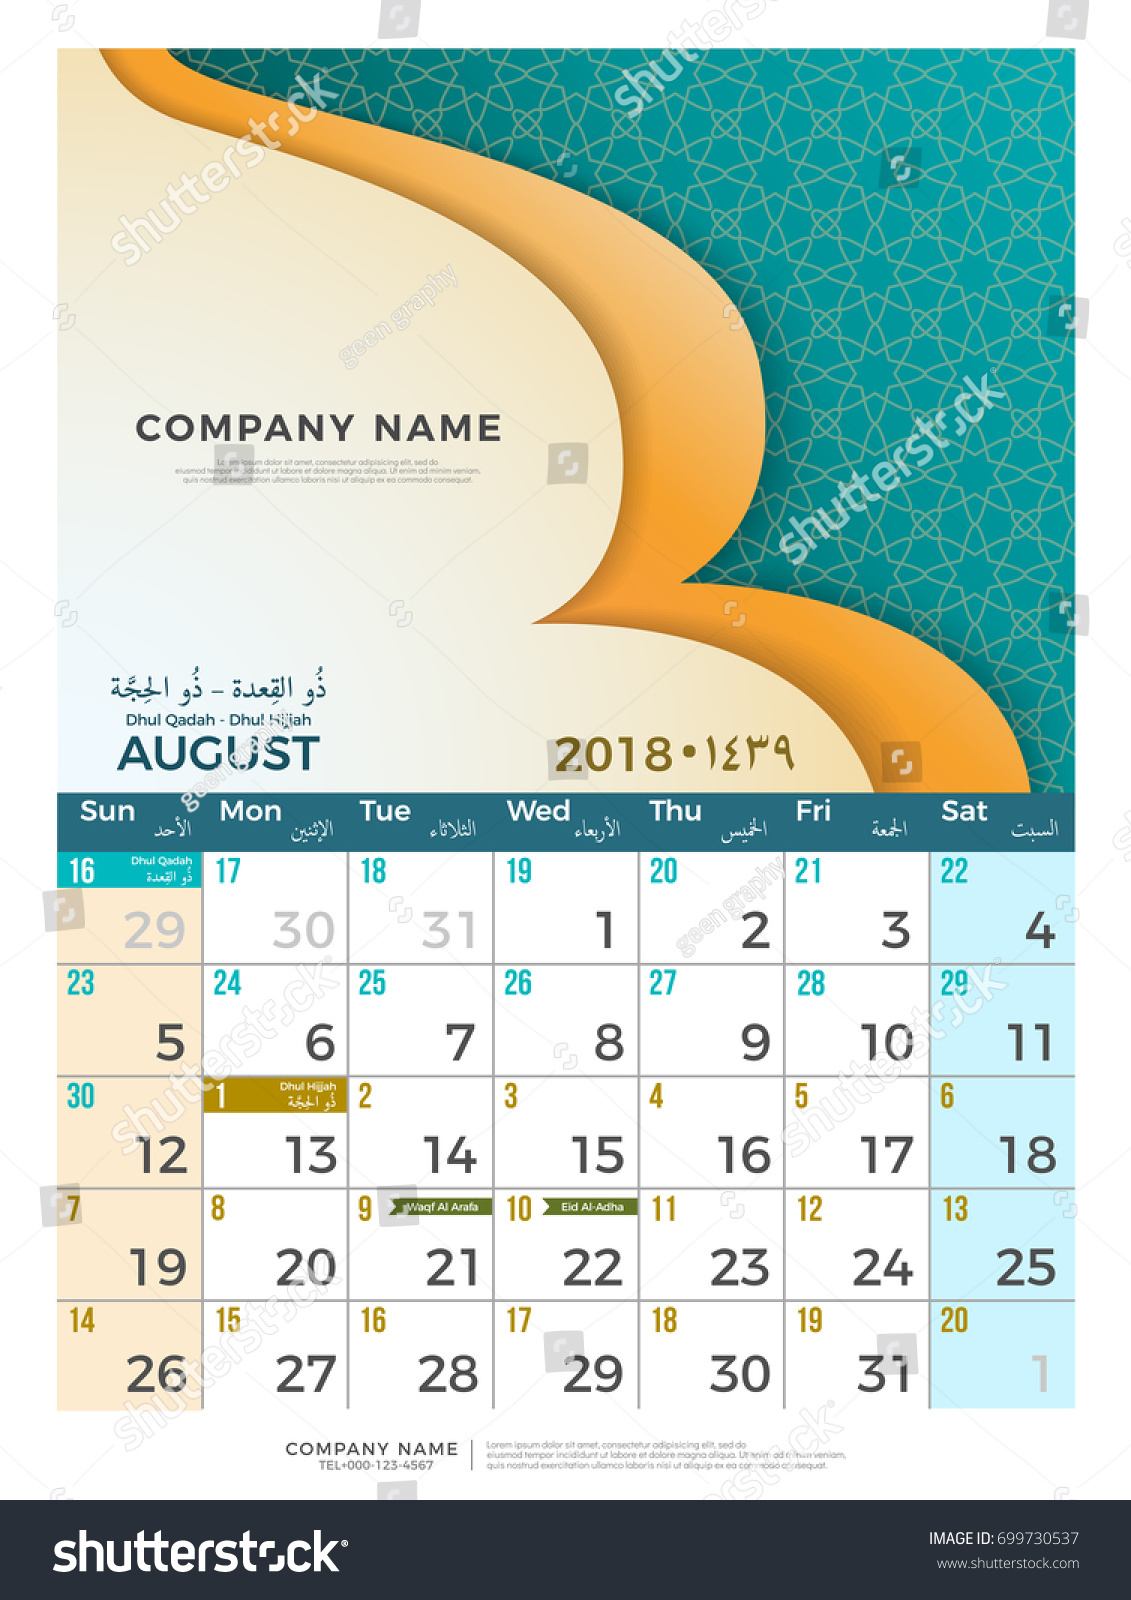 08 August Hijri 1439 1440 Islamic Stock Vector (Royalty Free) 699730537